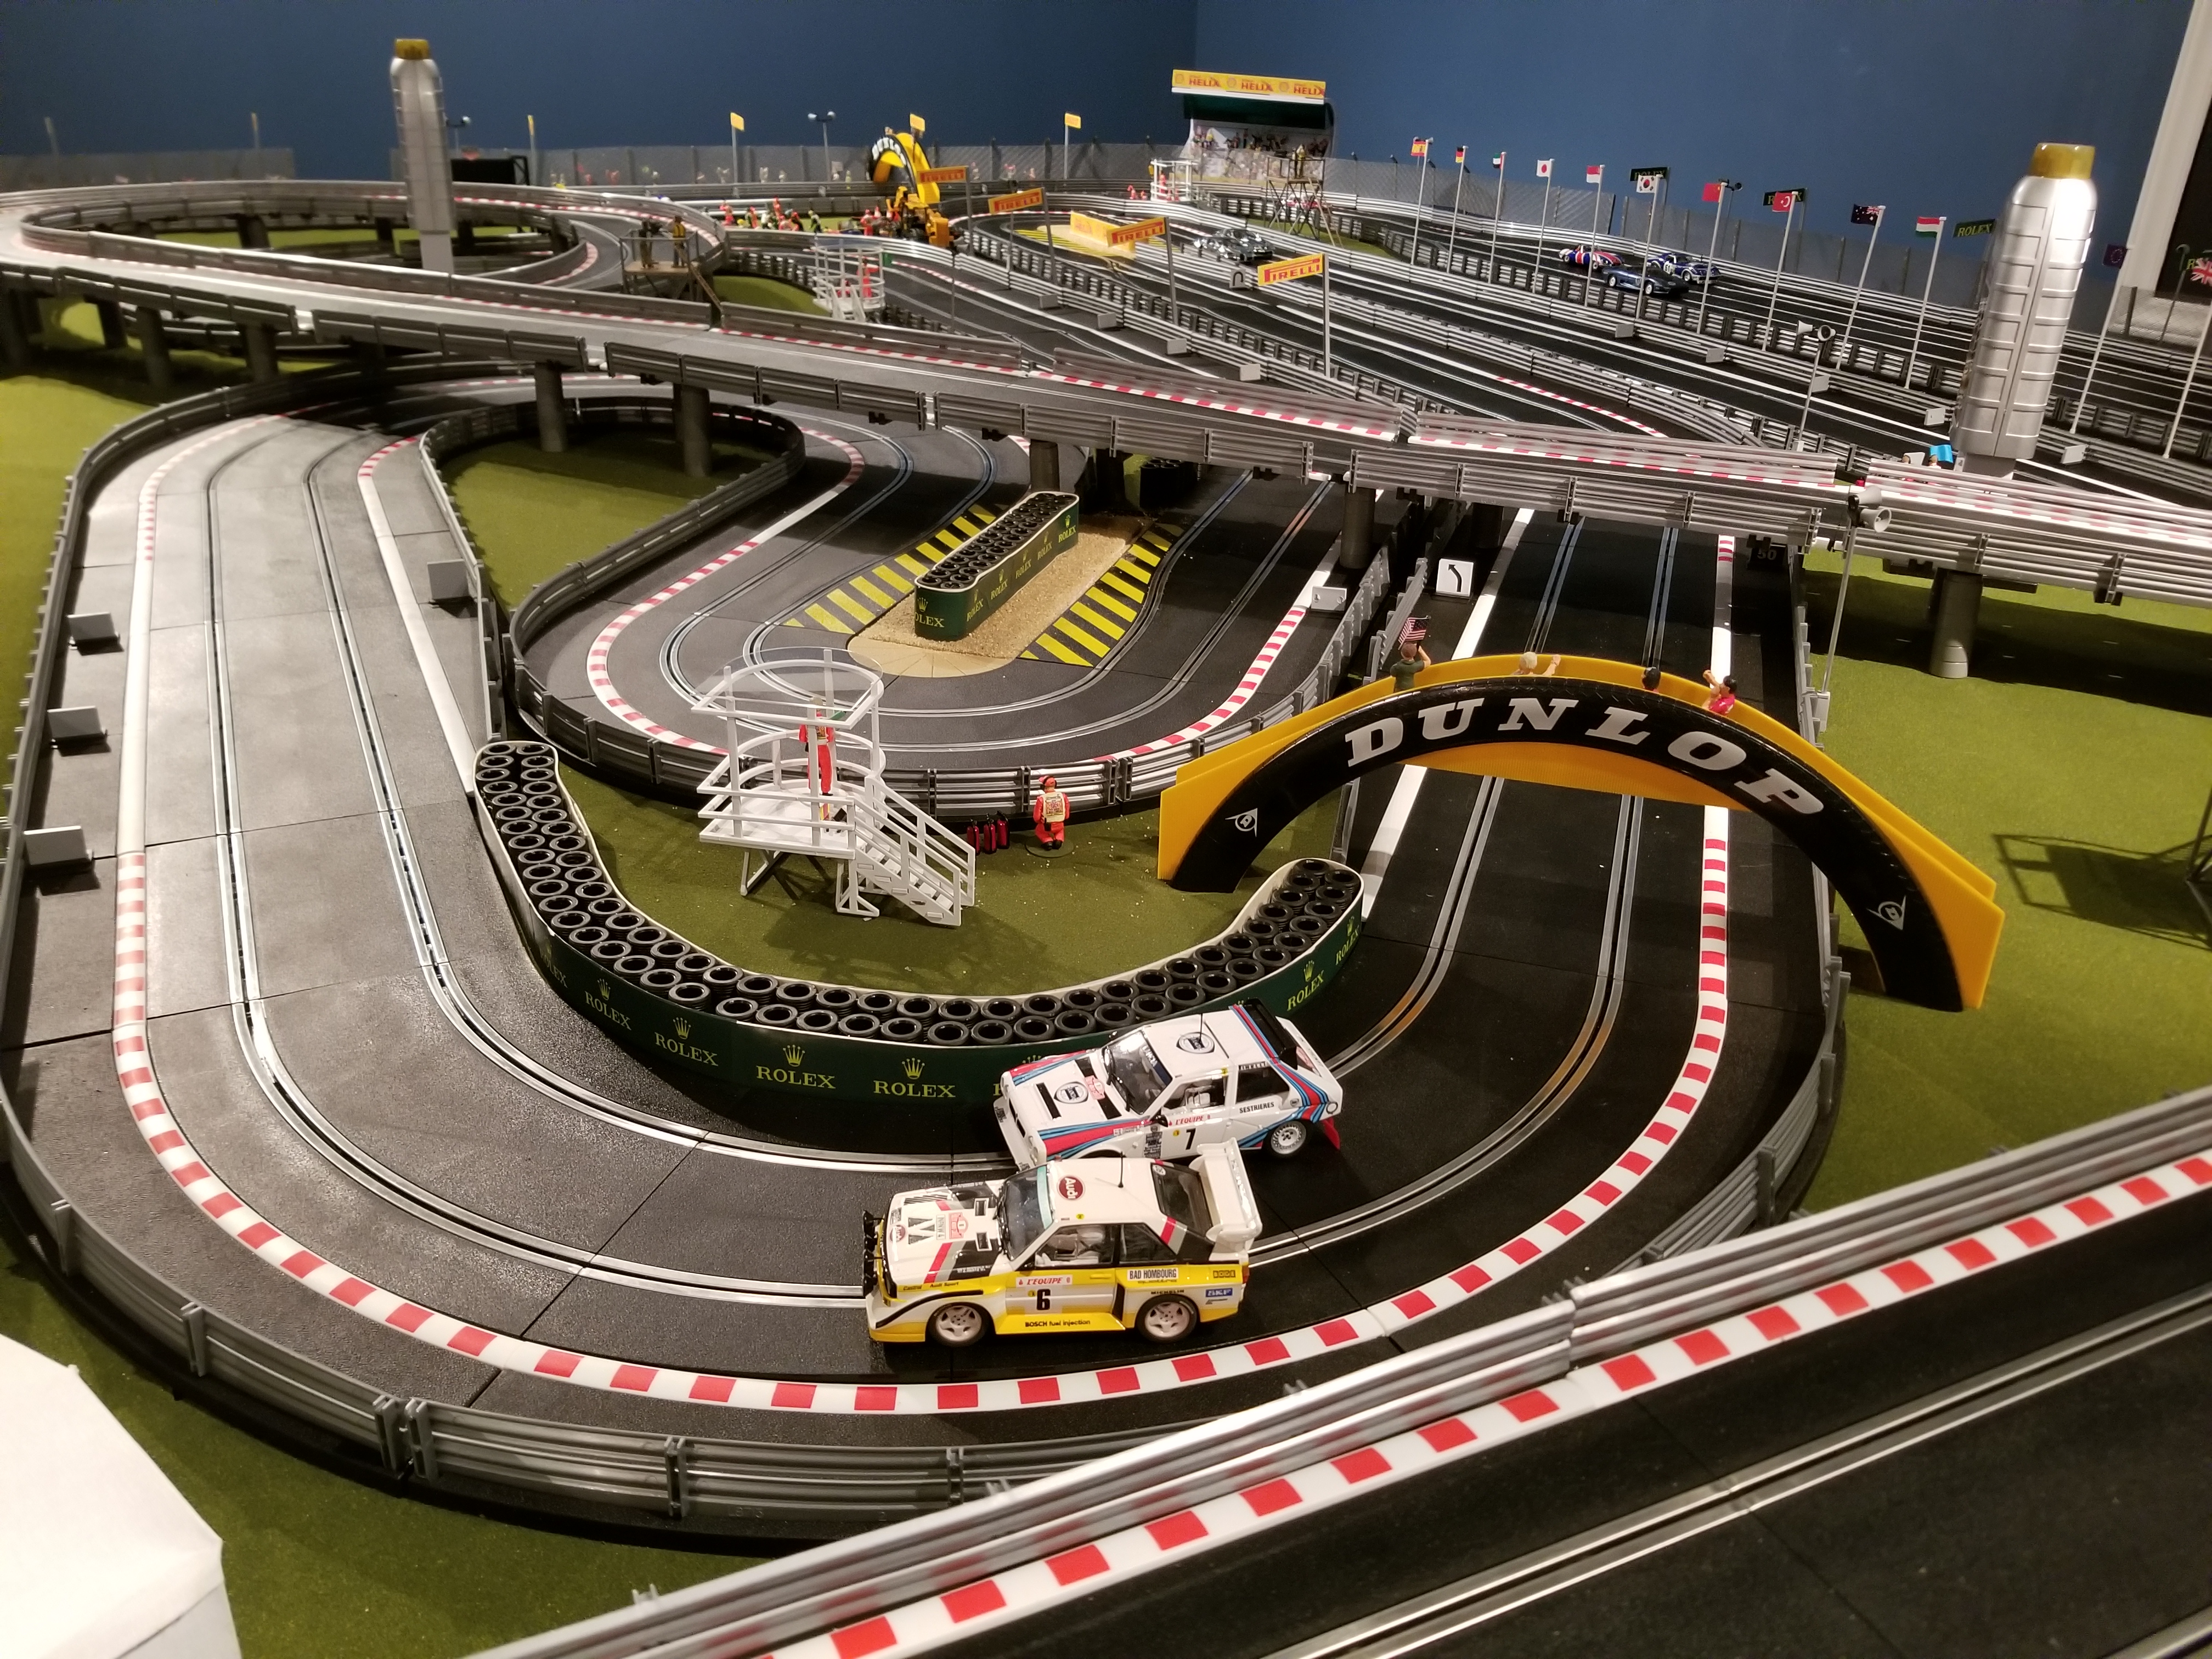 Scalextric Slot Car Racing  Buy Slot Car Racing Sets & Cars from Jadlam  Toys & Models